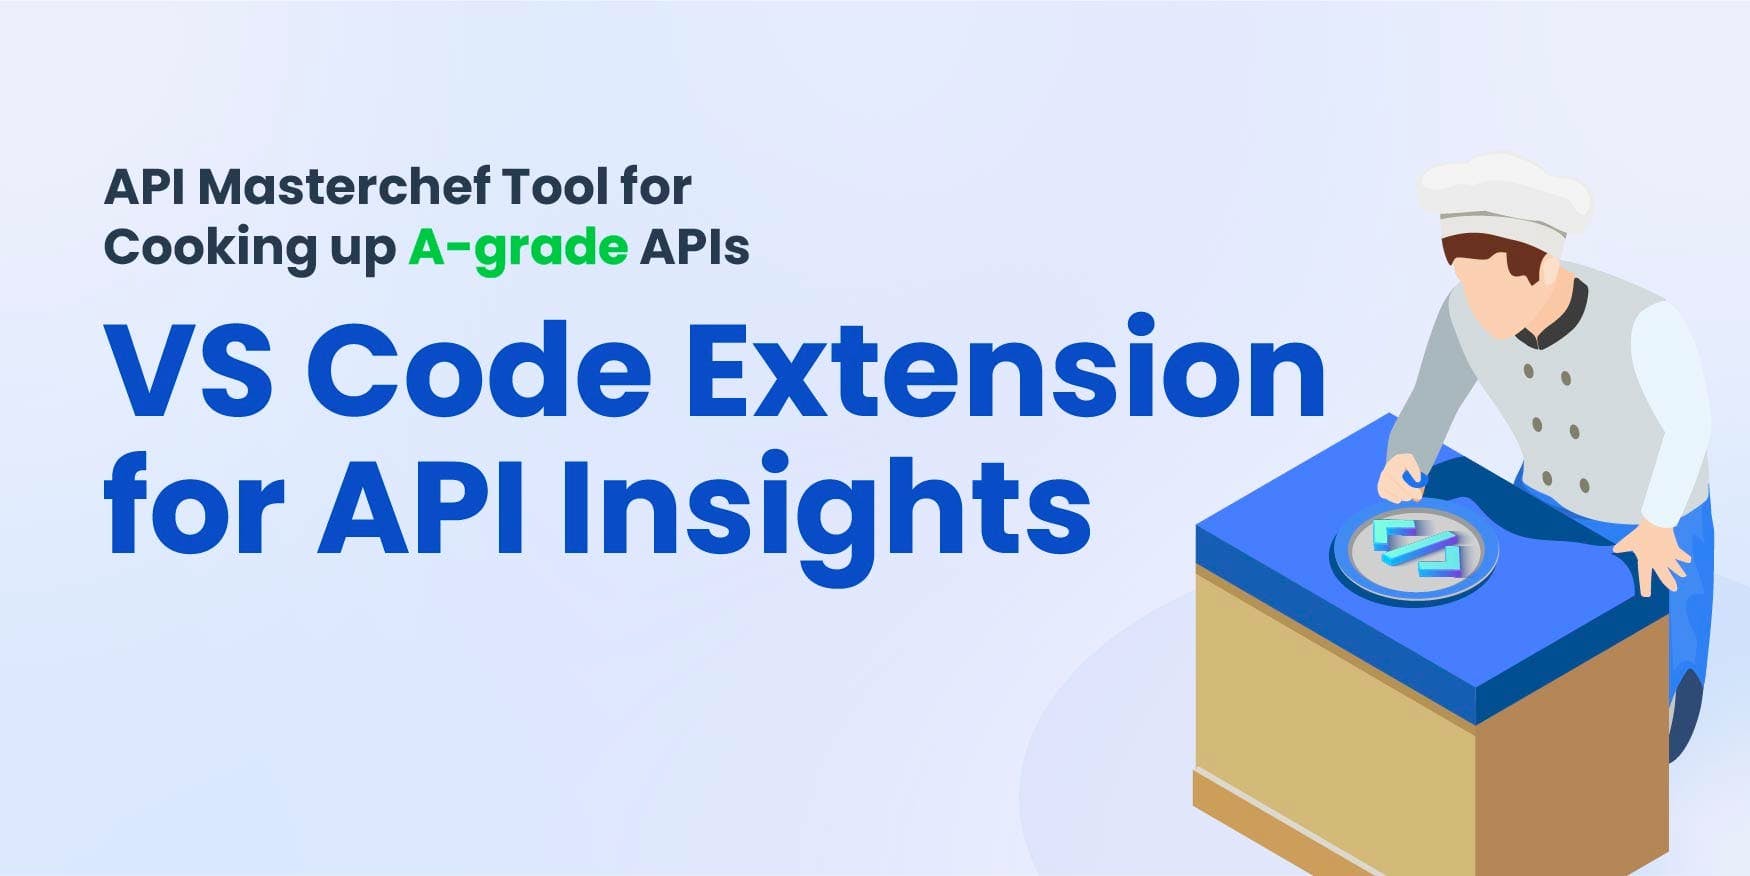 API Masterchef Tool For Cooking up A-Grade APIs - VS Code Extension for API Insights